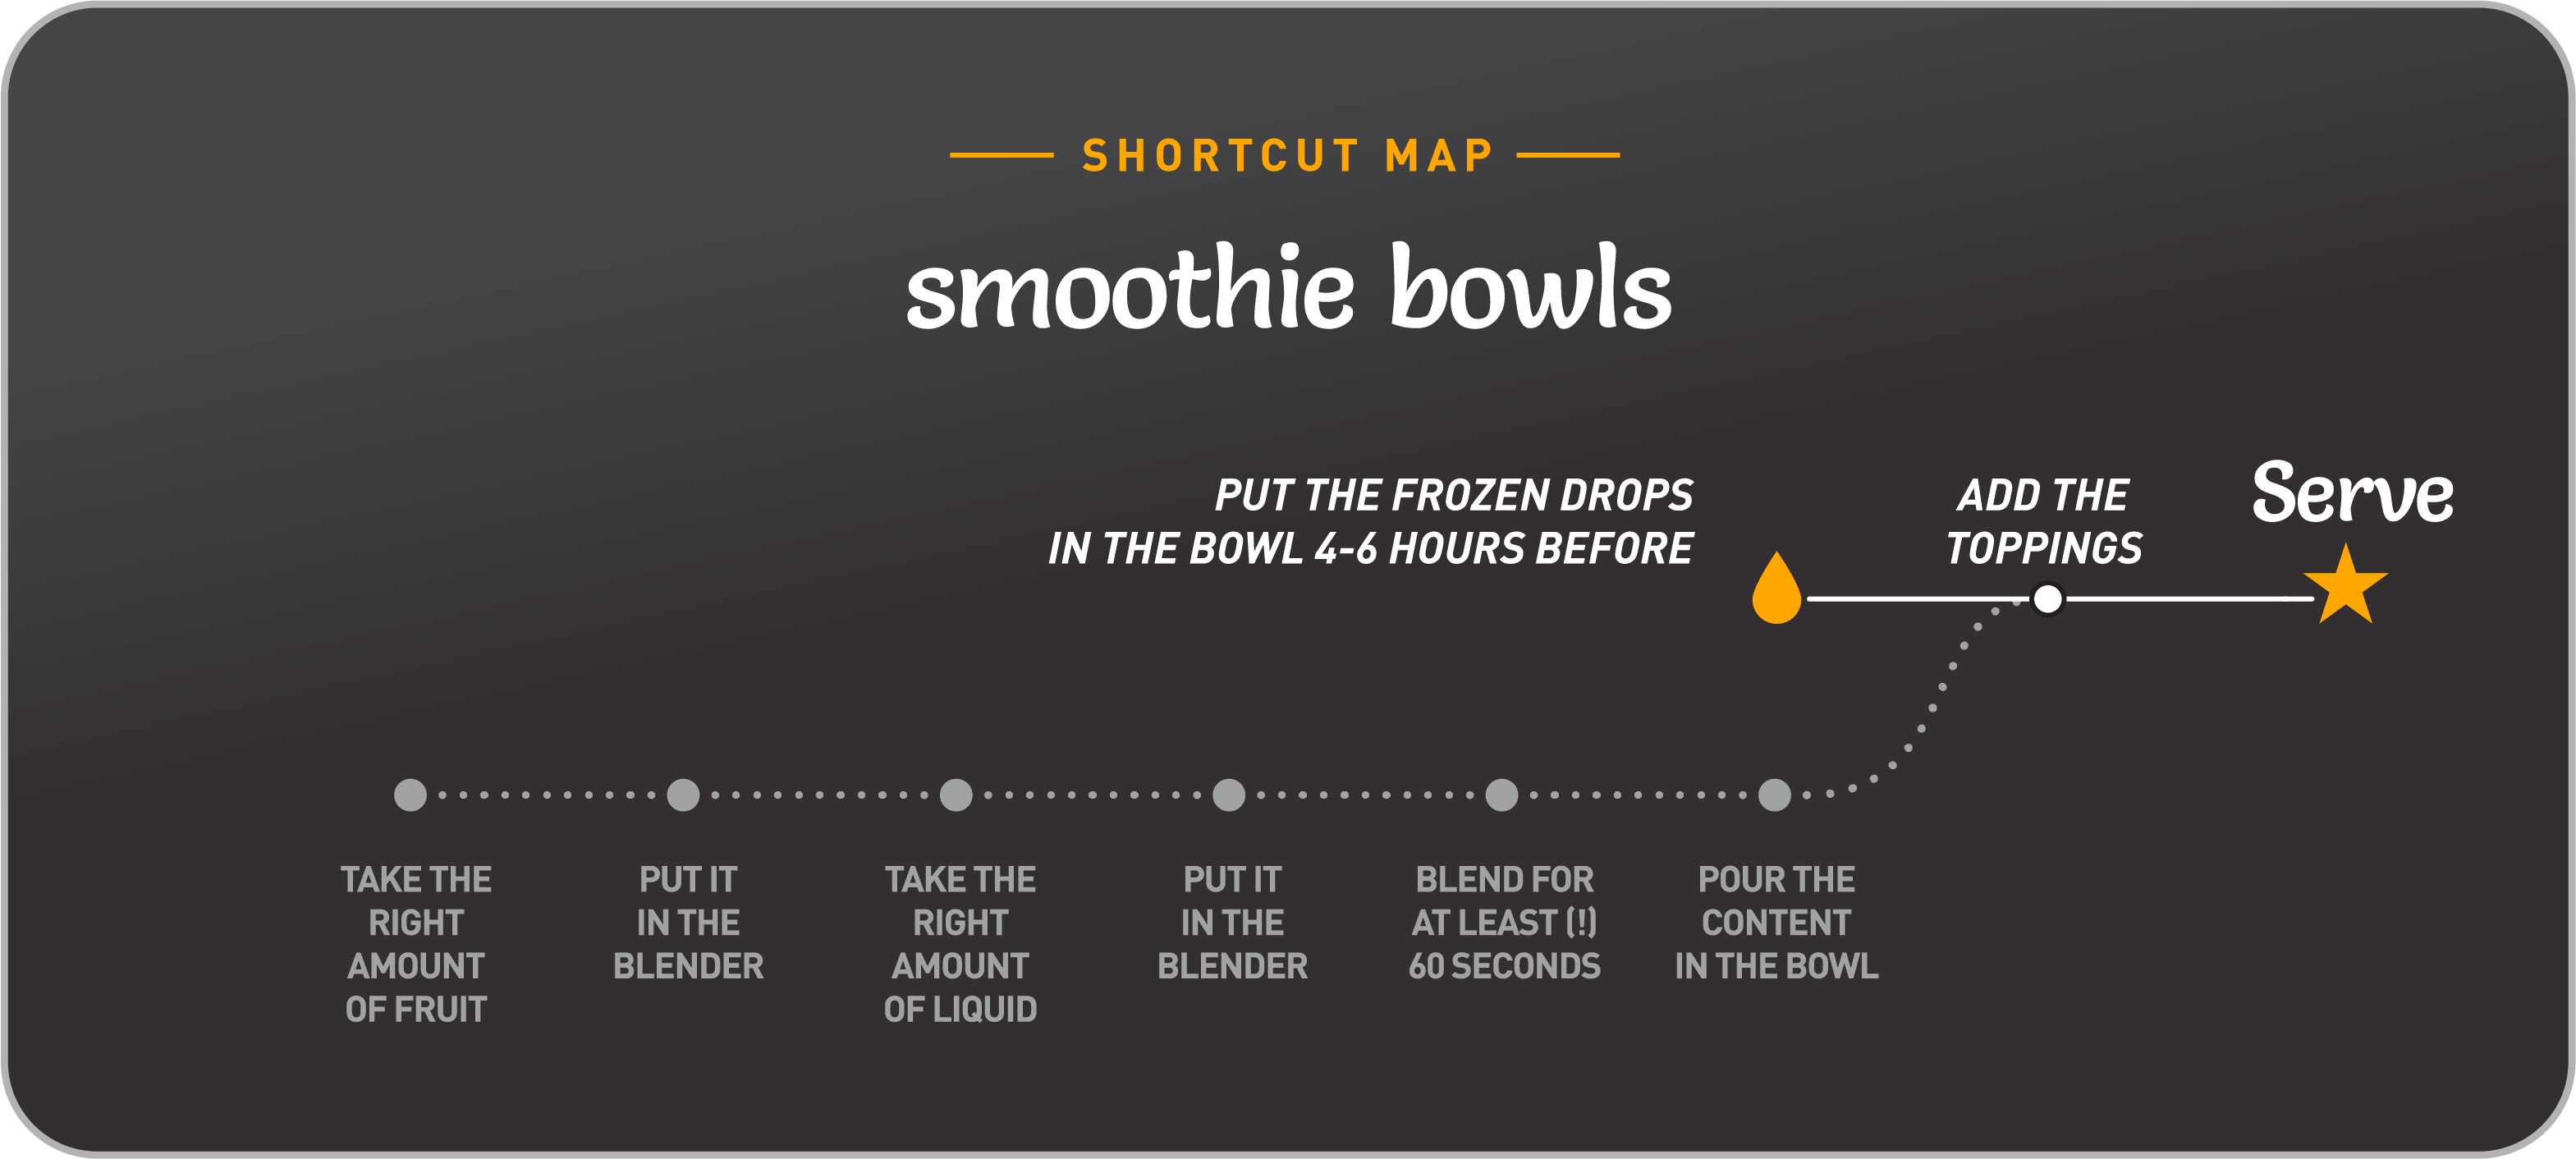 shortcut-map-smoothie-bowls